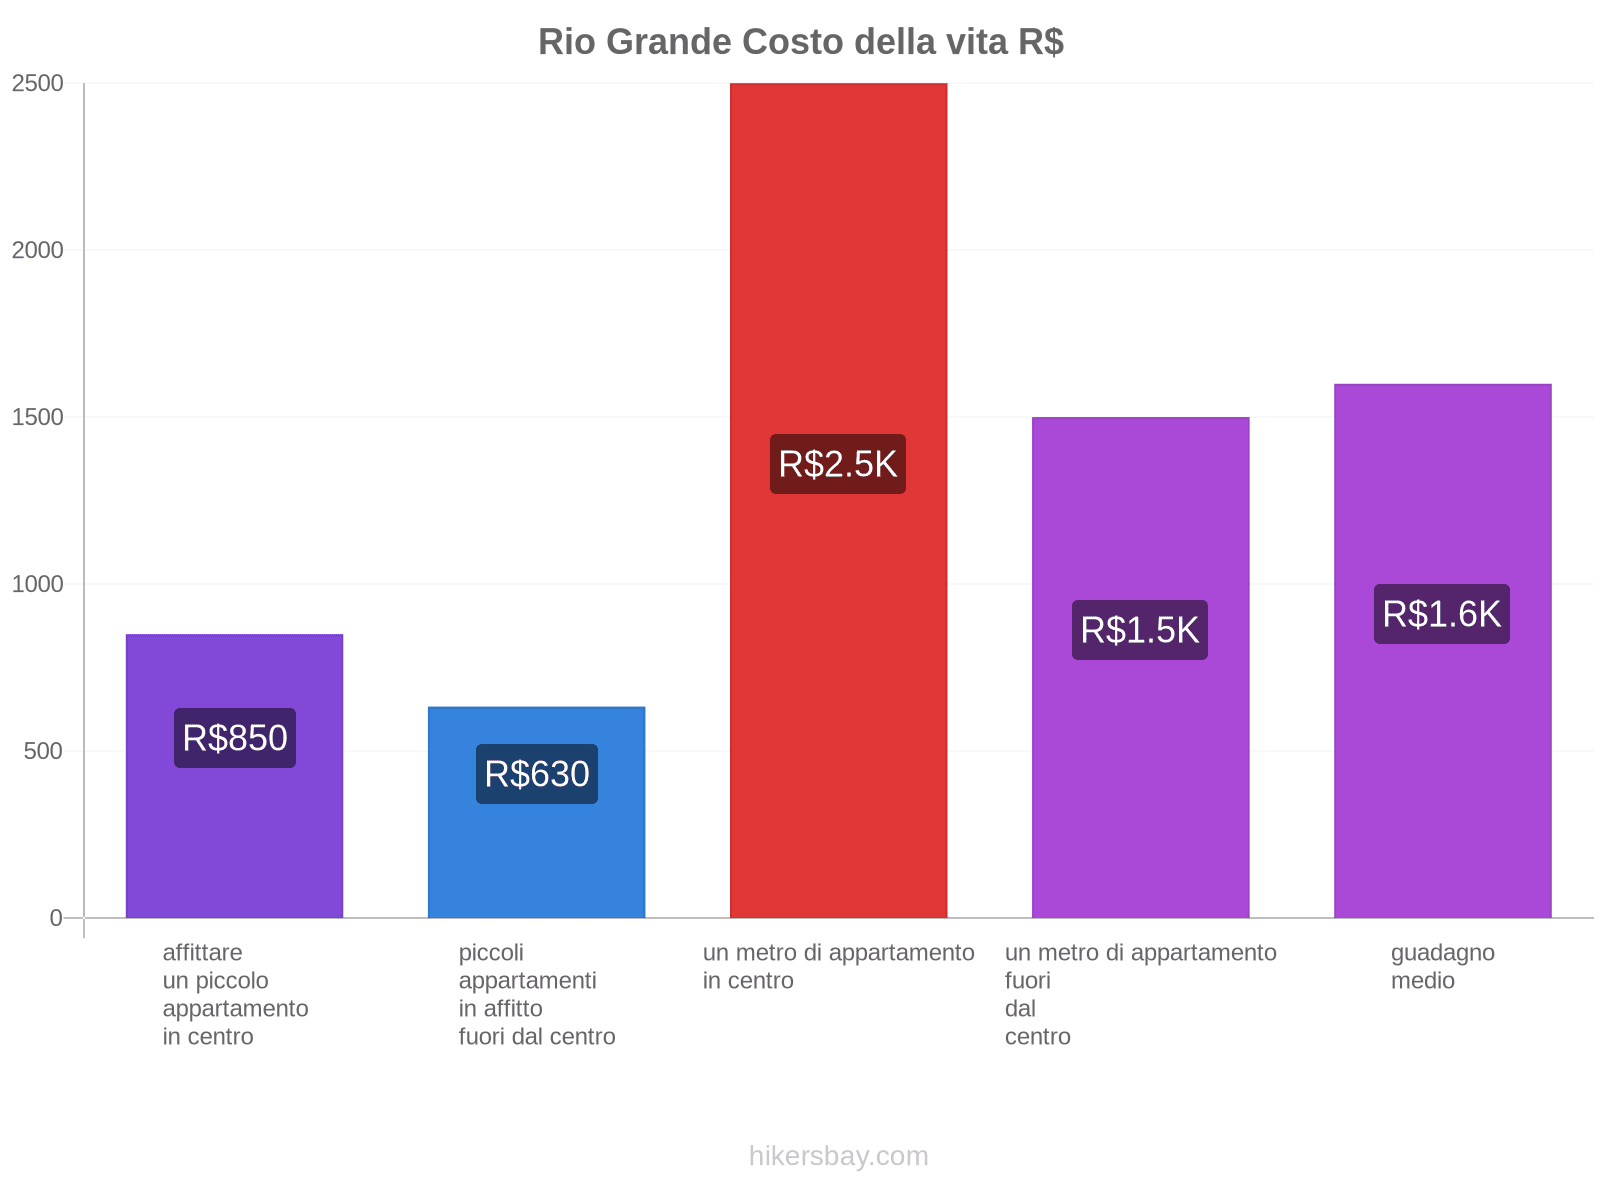 Rio Grande costo della vita hikersbay.com